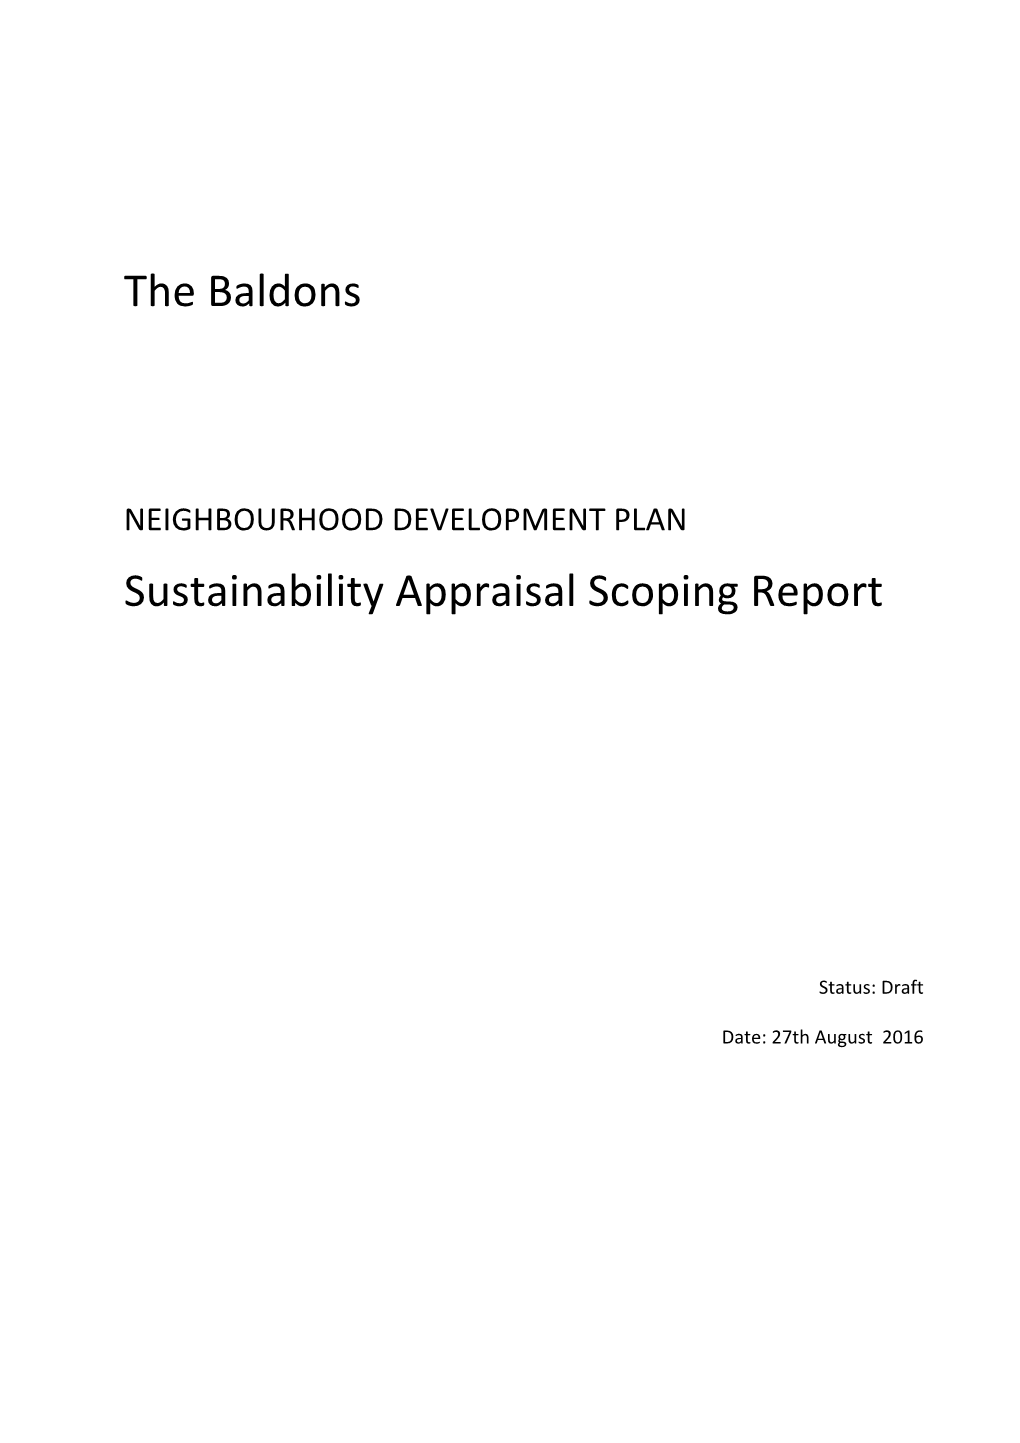 NEIGHBOURHOOD DEVELOPMENT PLAN Sustainability Appraisal Scoping Report